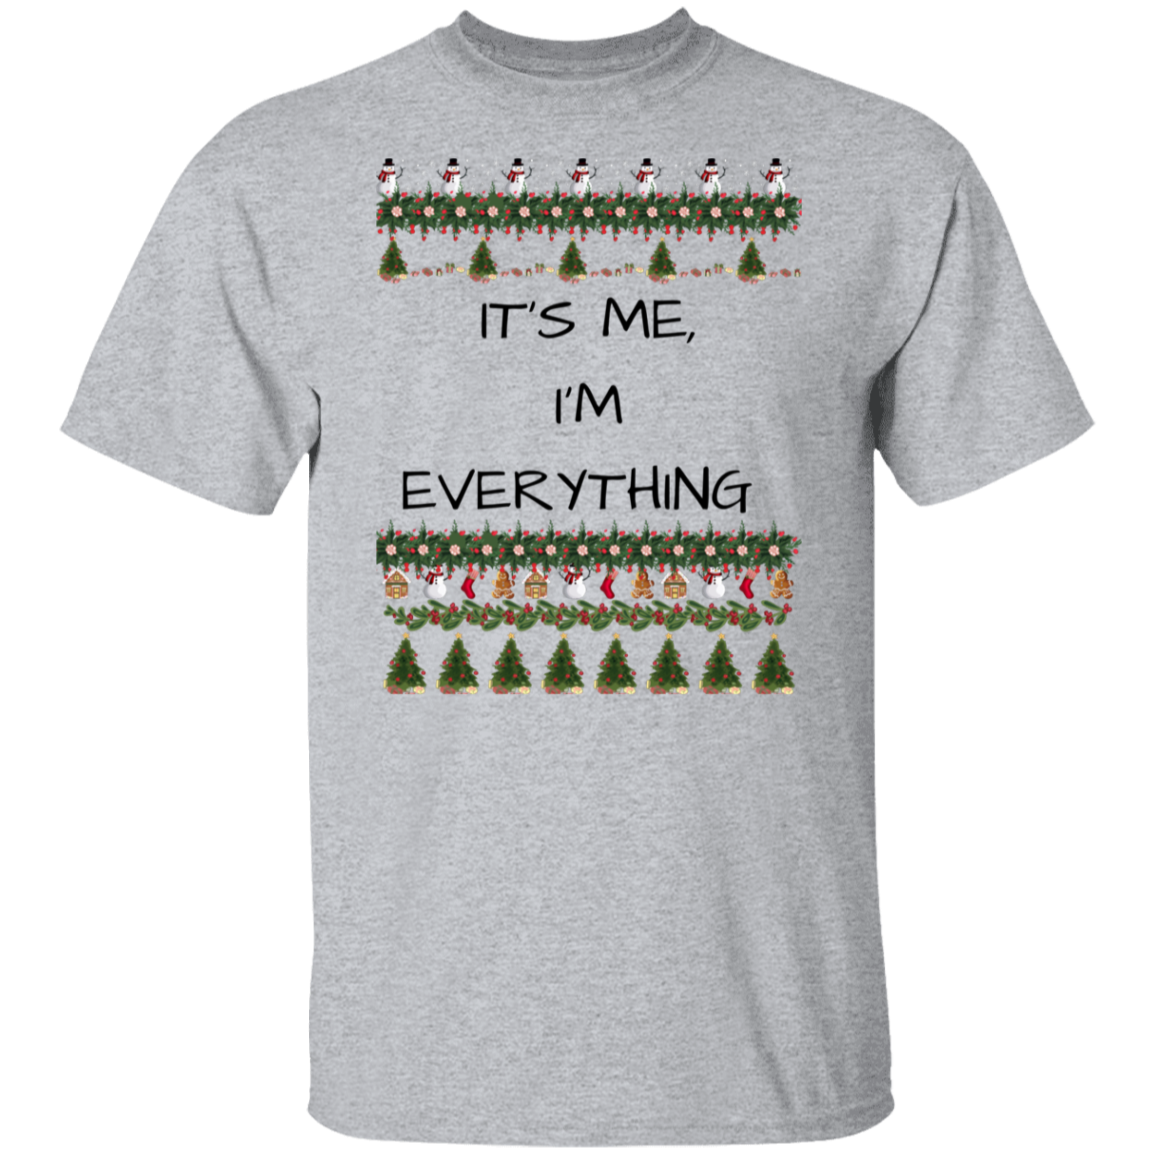 I'M EVERYTHING T-Shirt